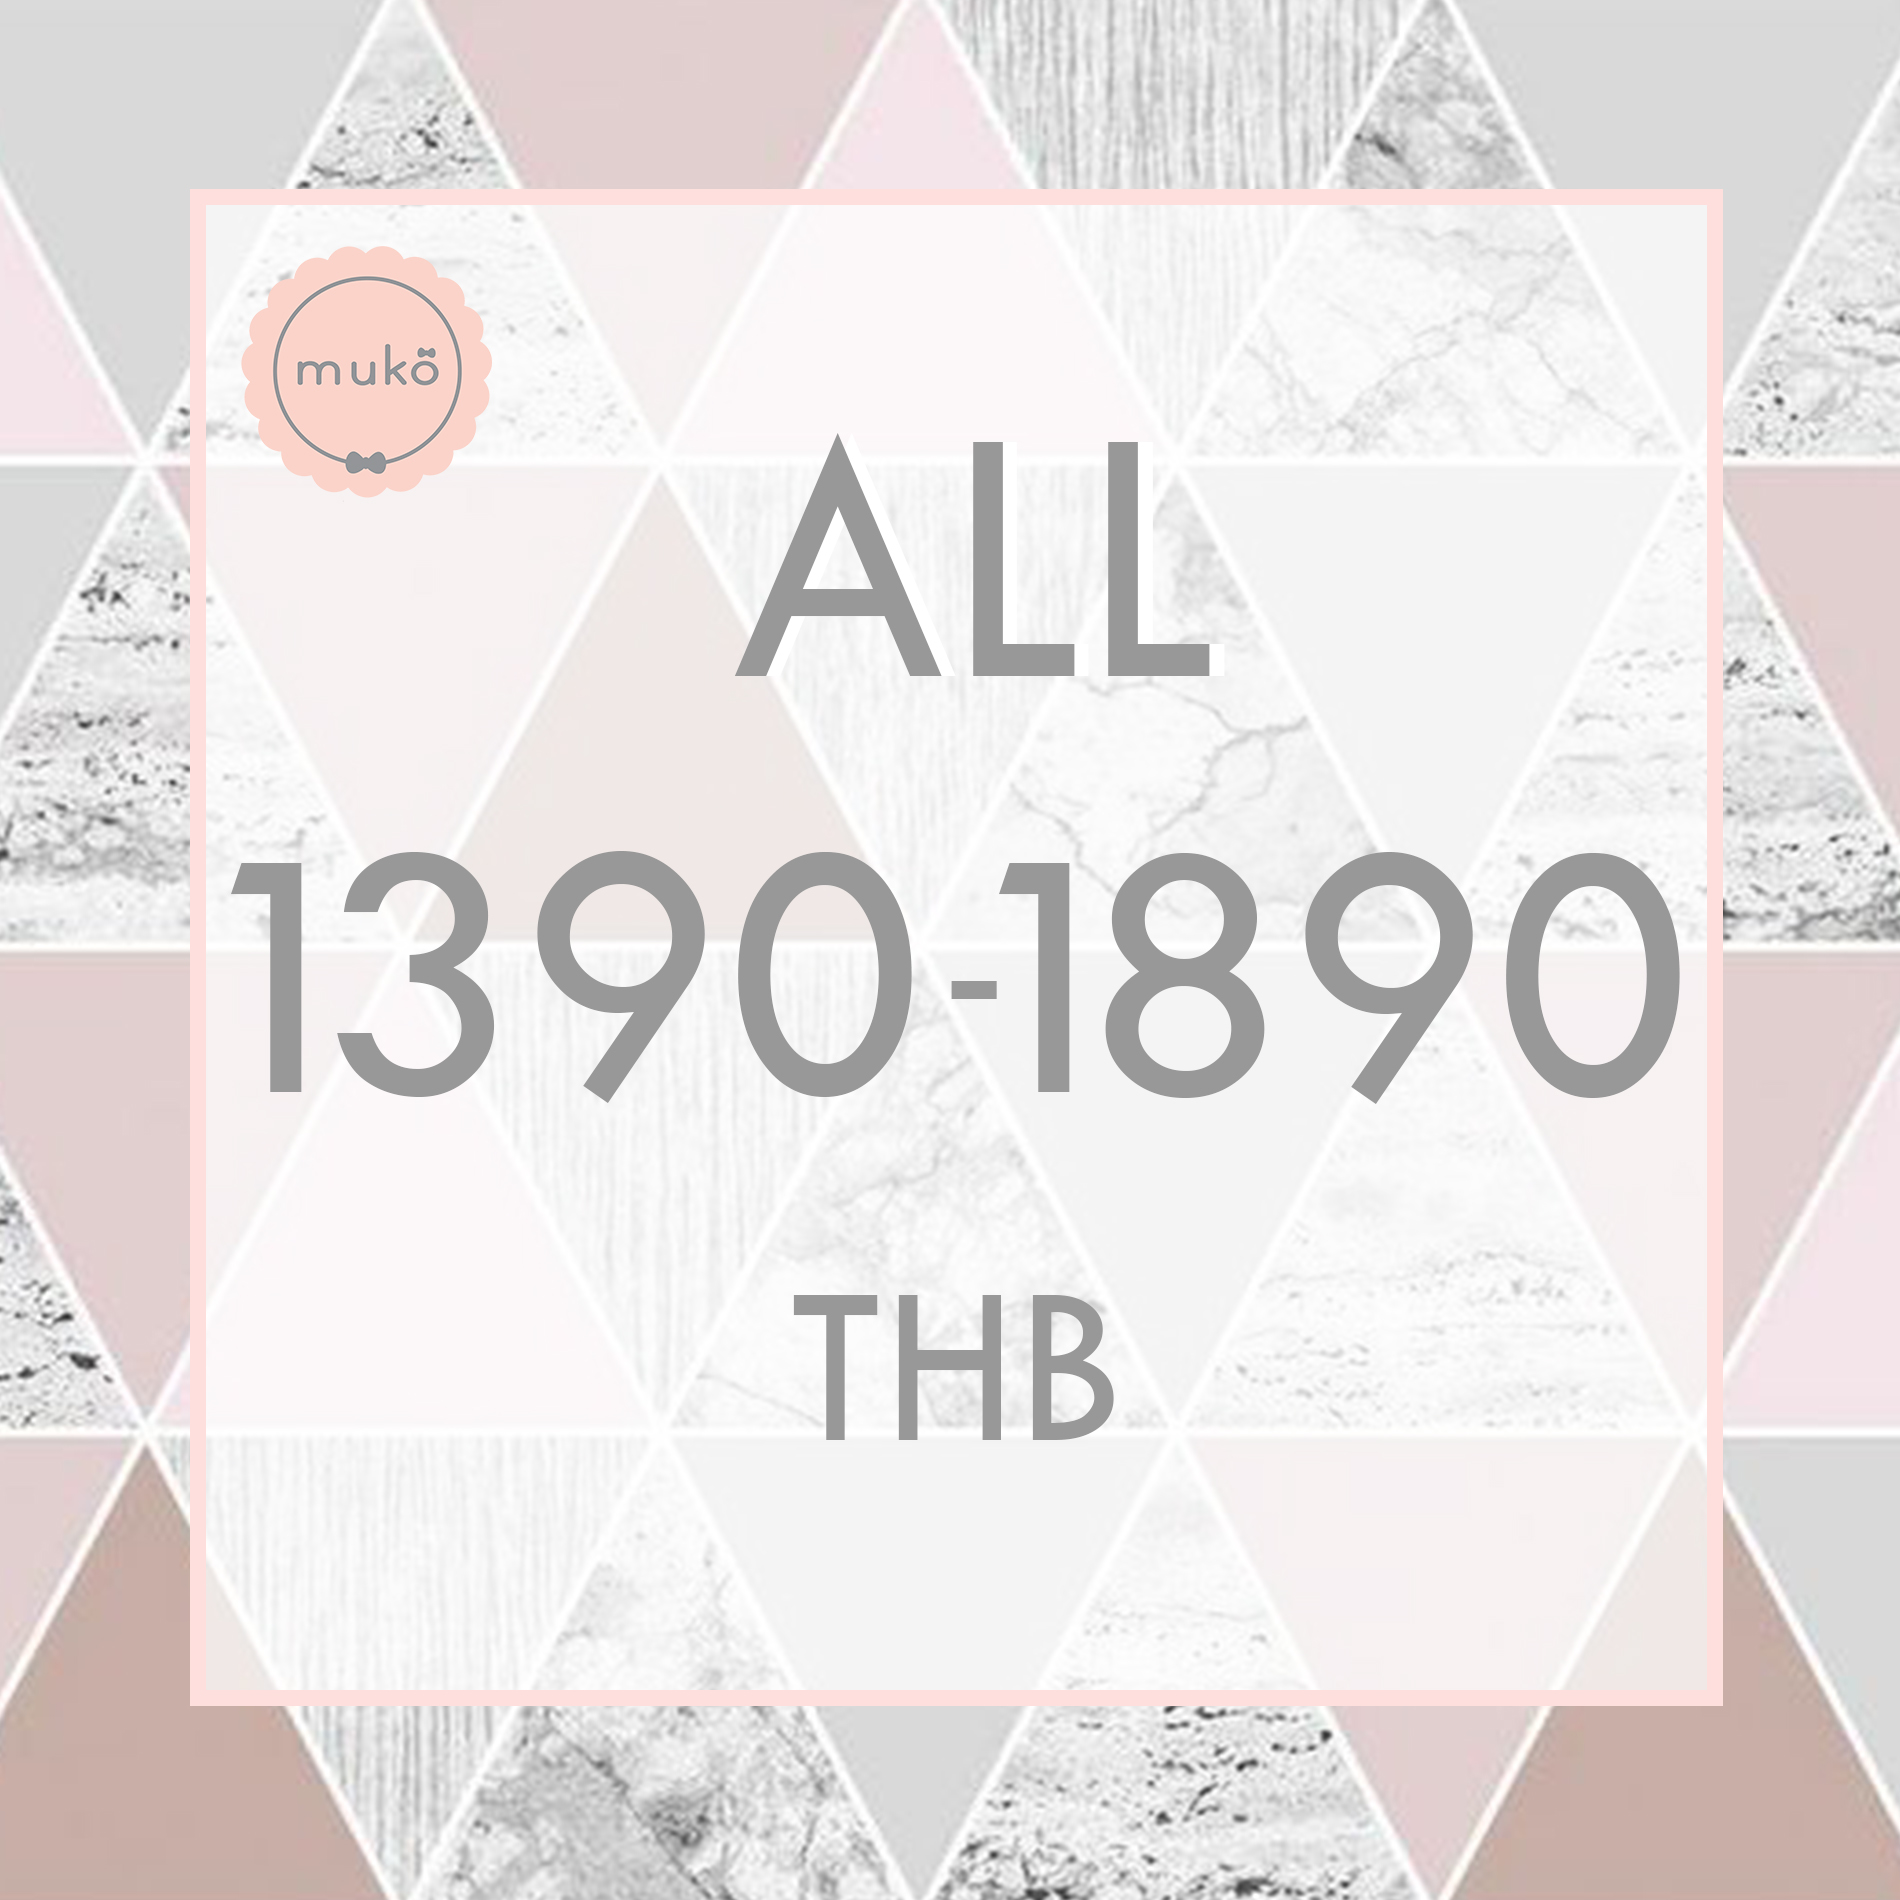 ALL1390-1890THB